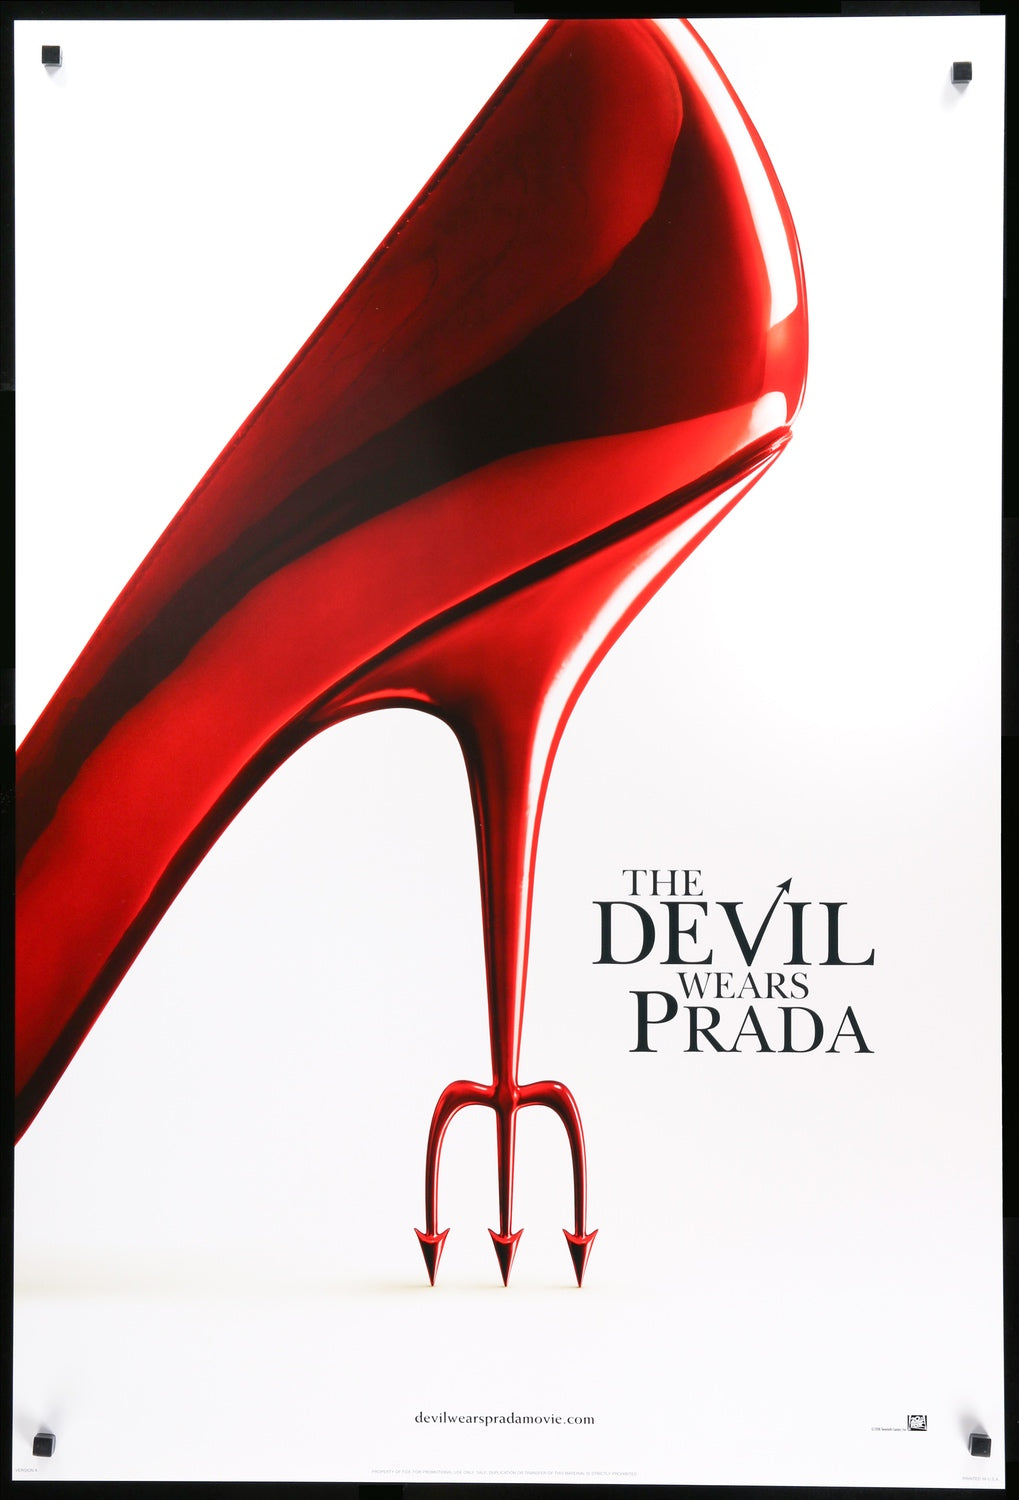 Devil Wears Prada (2006) original movie poster for sale at Original Film Art